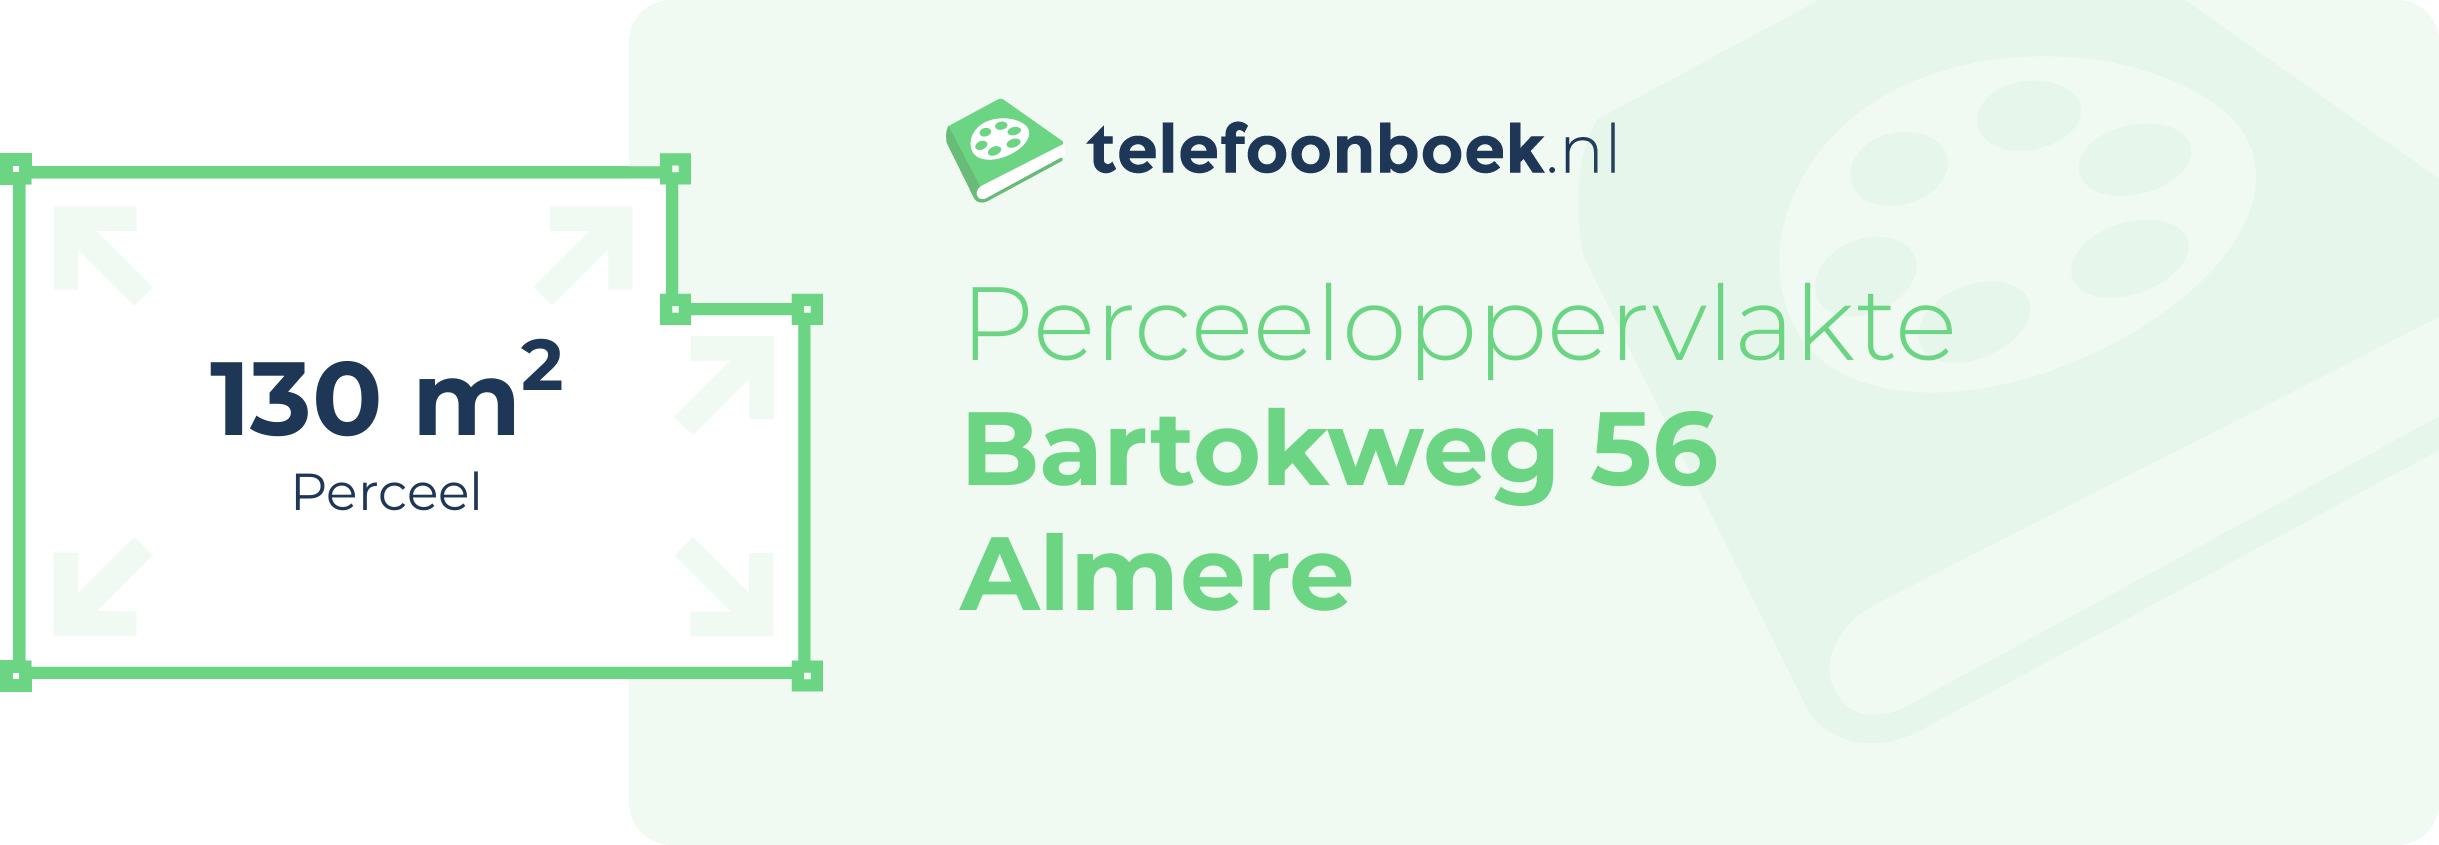 Perceeloppervlakte Bartokweg 56 Almere